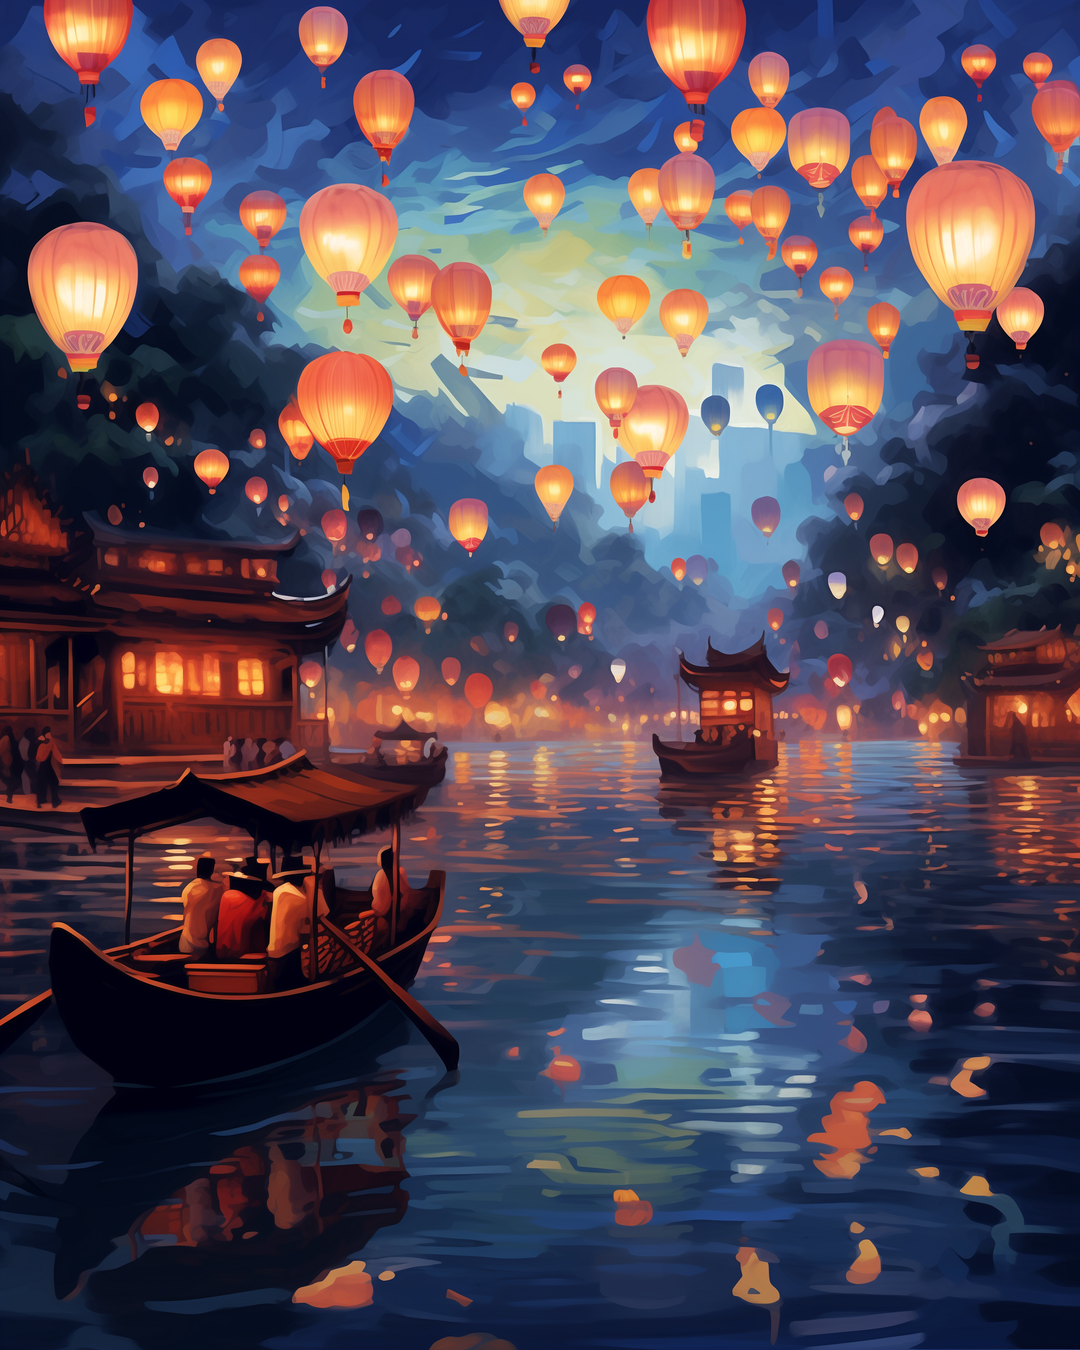 Lanterns on the Water